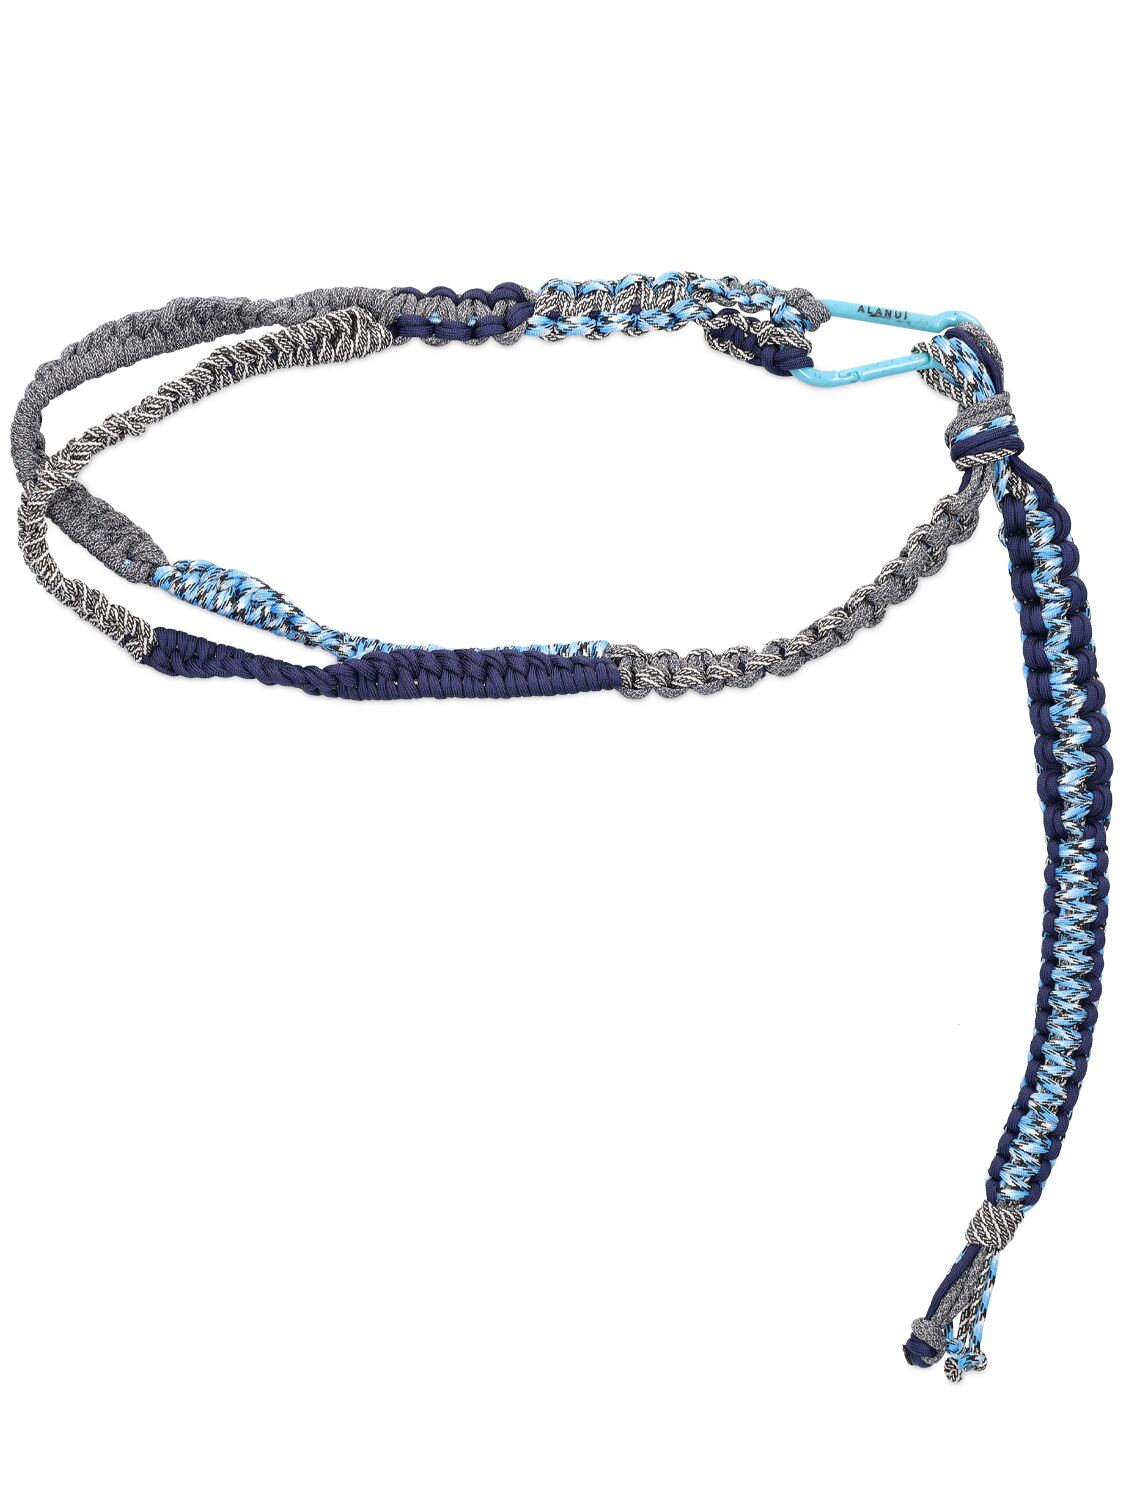 Alanui Rope Belt W/ Carabiner Closure In Blue Turquoise